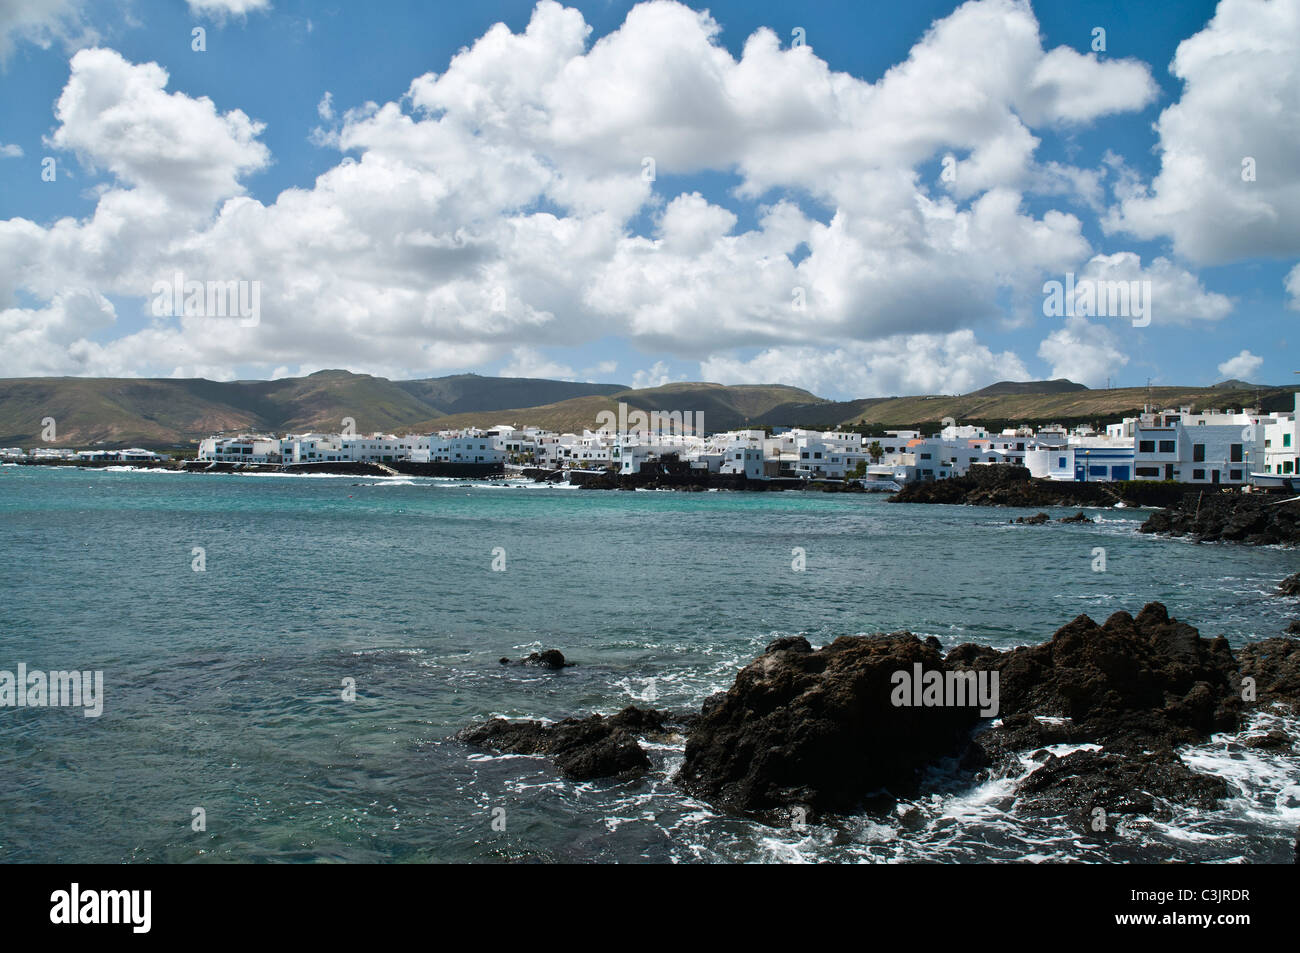 Dh PUNTA DE MUJERES Lanzarote Lanzarote villaggio costiero di roccia lavica shore villaggi della costa Foto Stock